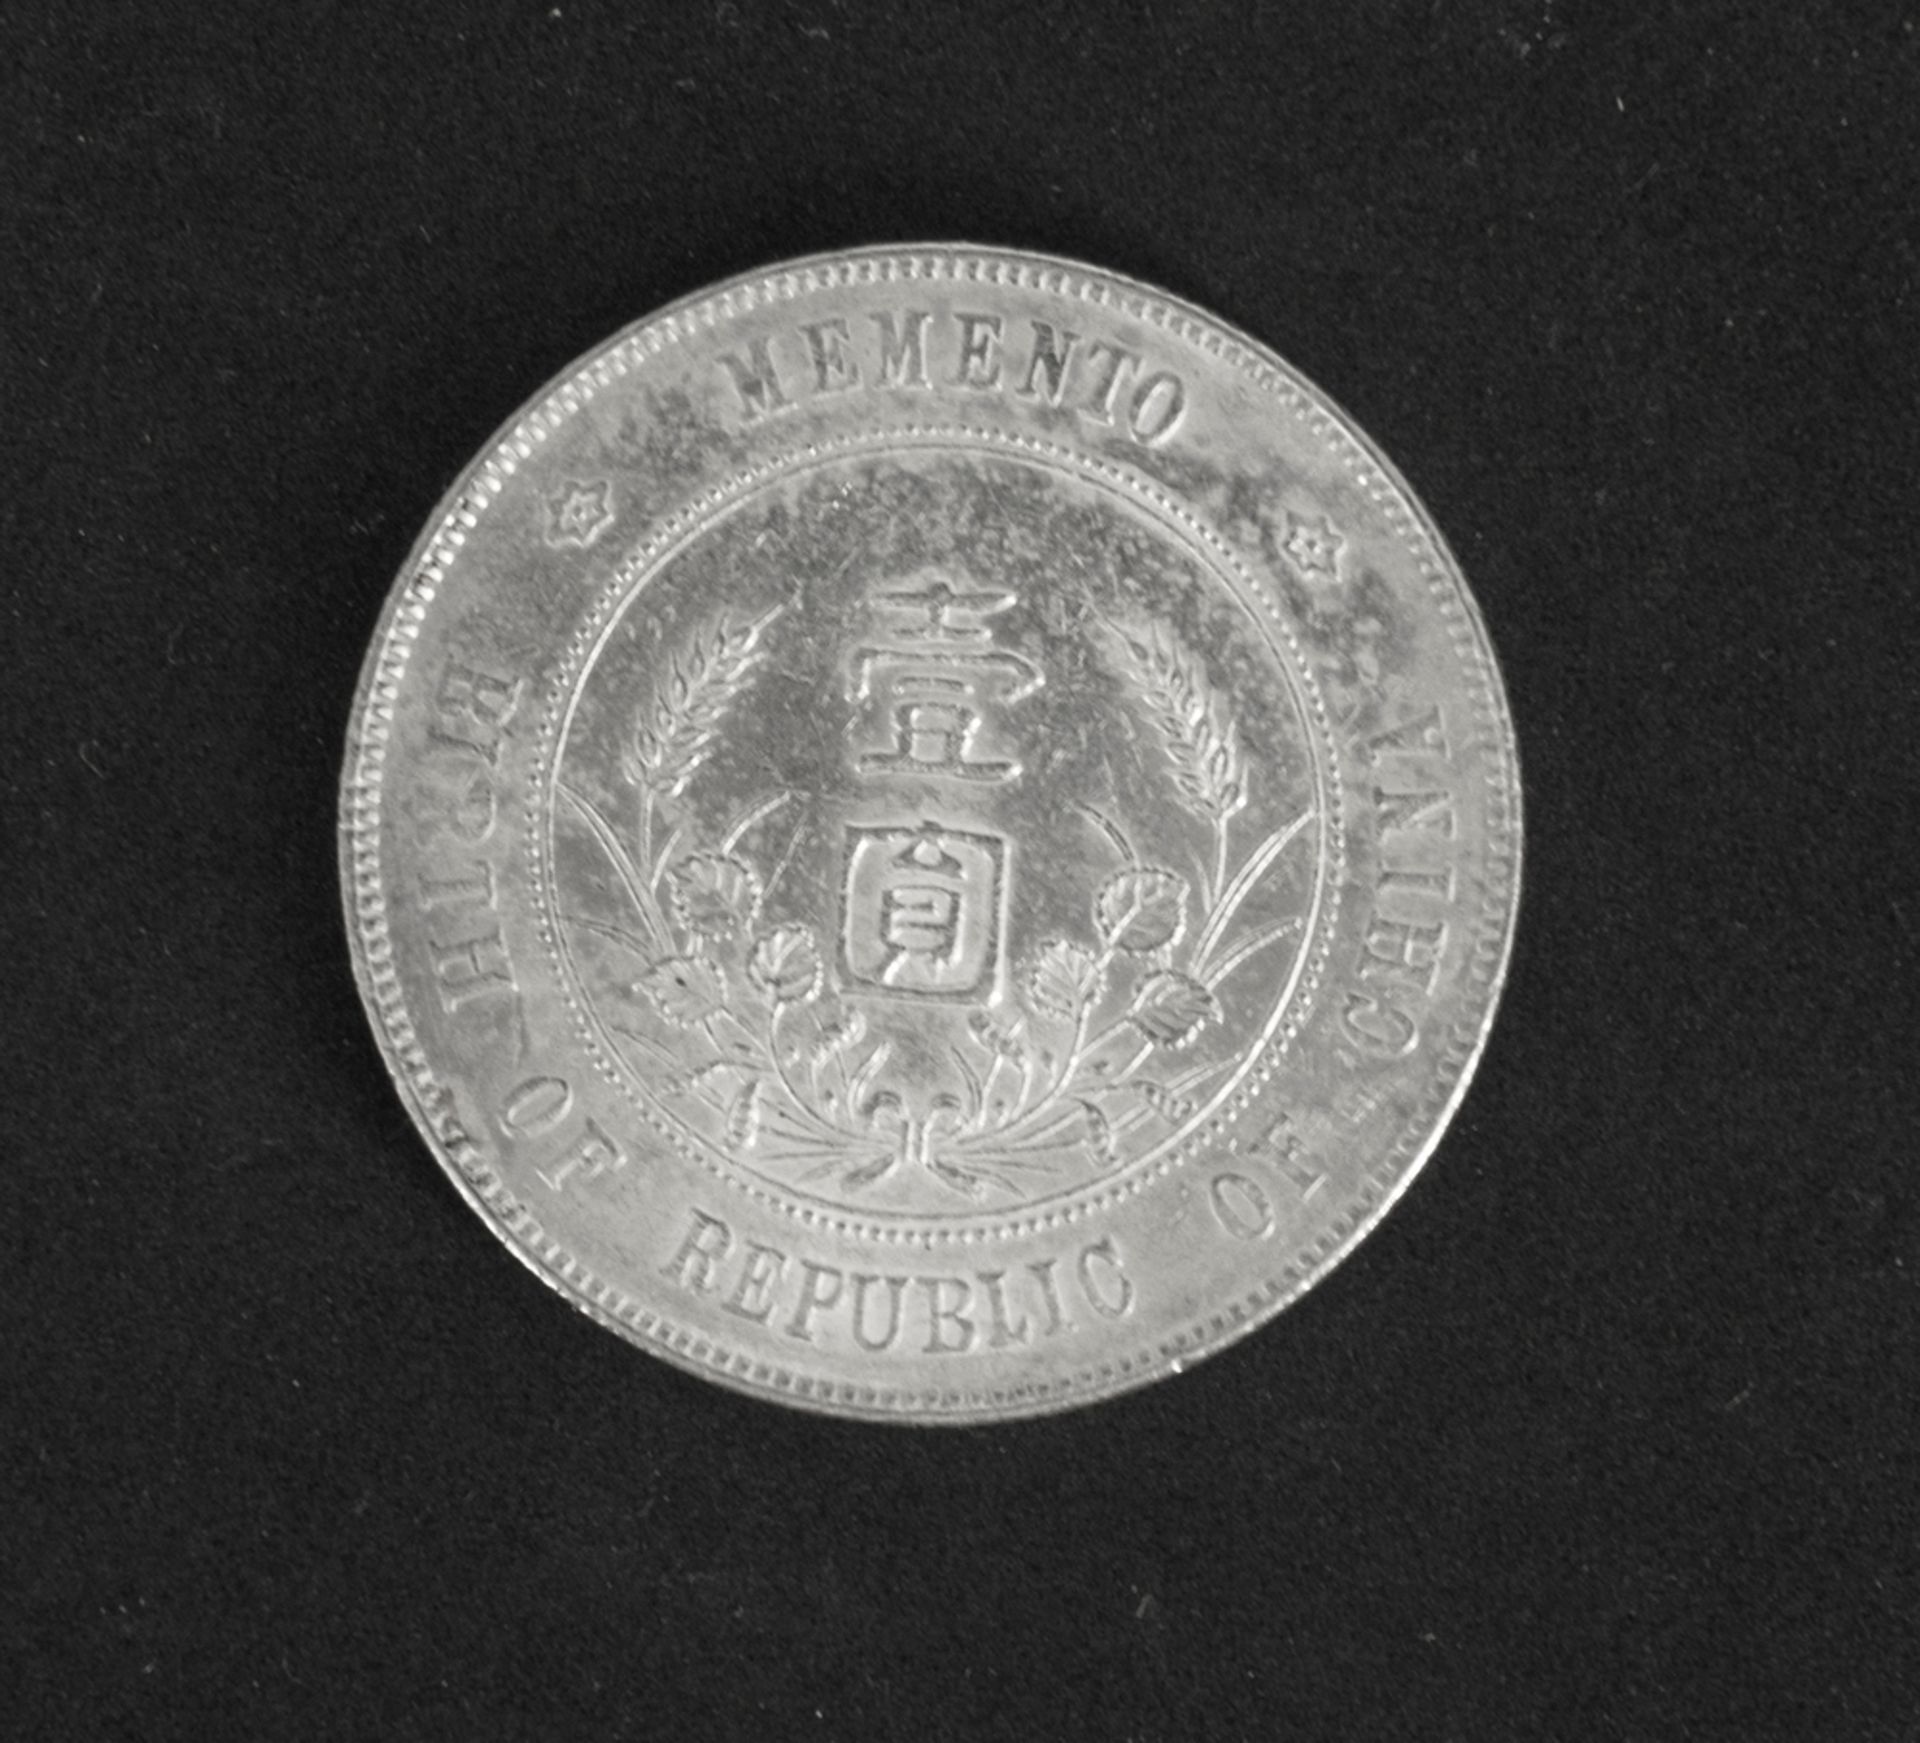 China Republik 1927, 1 Dollar "Dr. Sun Yat Sen". Silber. Erhaltung: ss. - Bild 2 aus 2